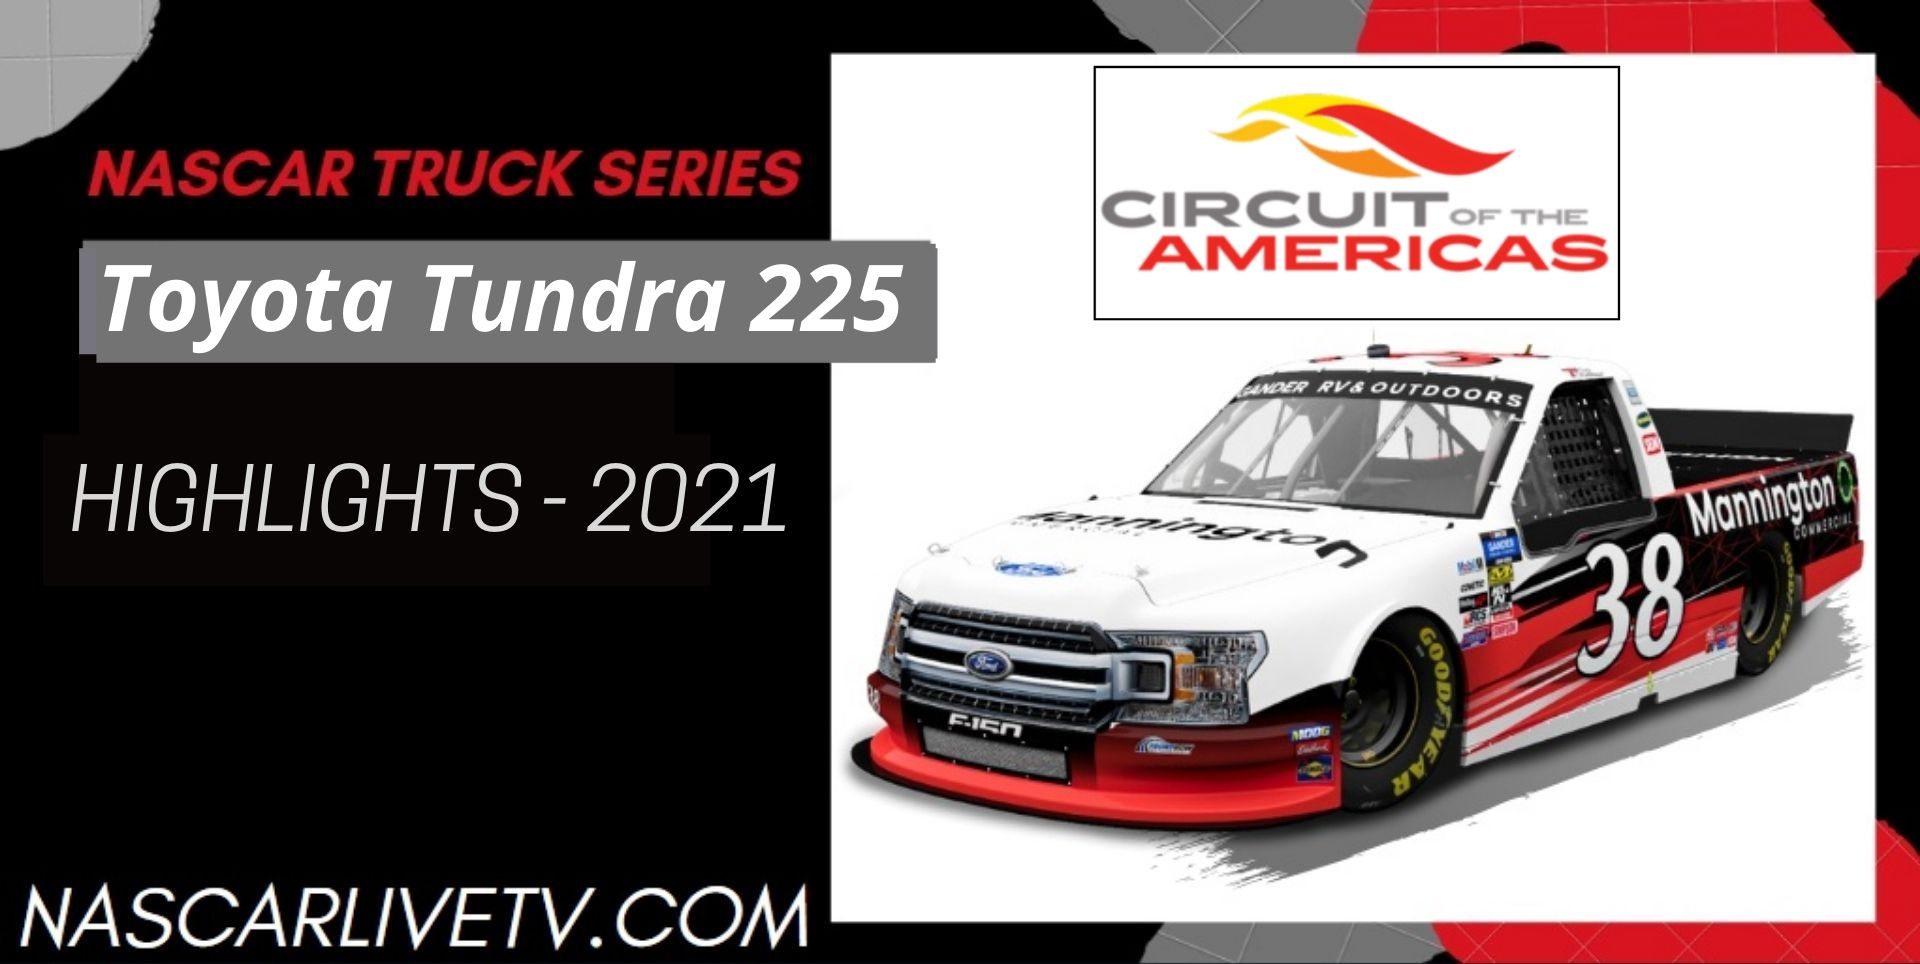 Toyota Tundra 225 Highlights NASCAR Truck Series 2021